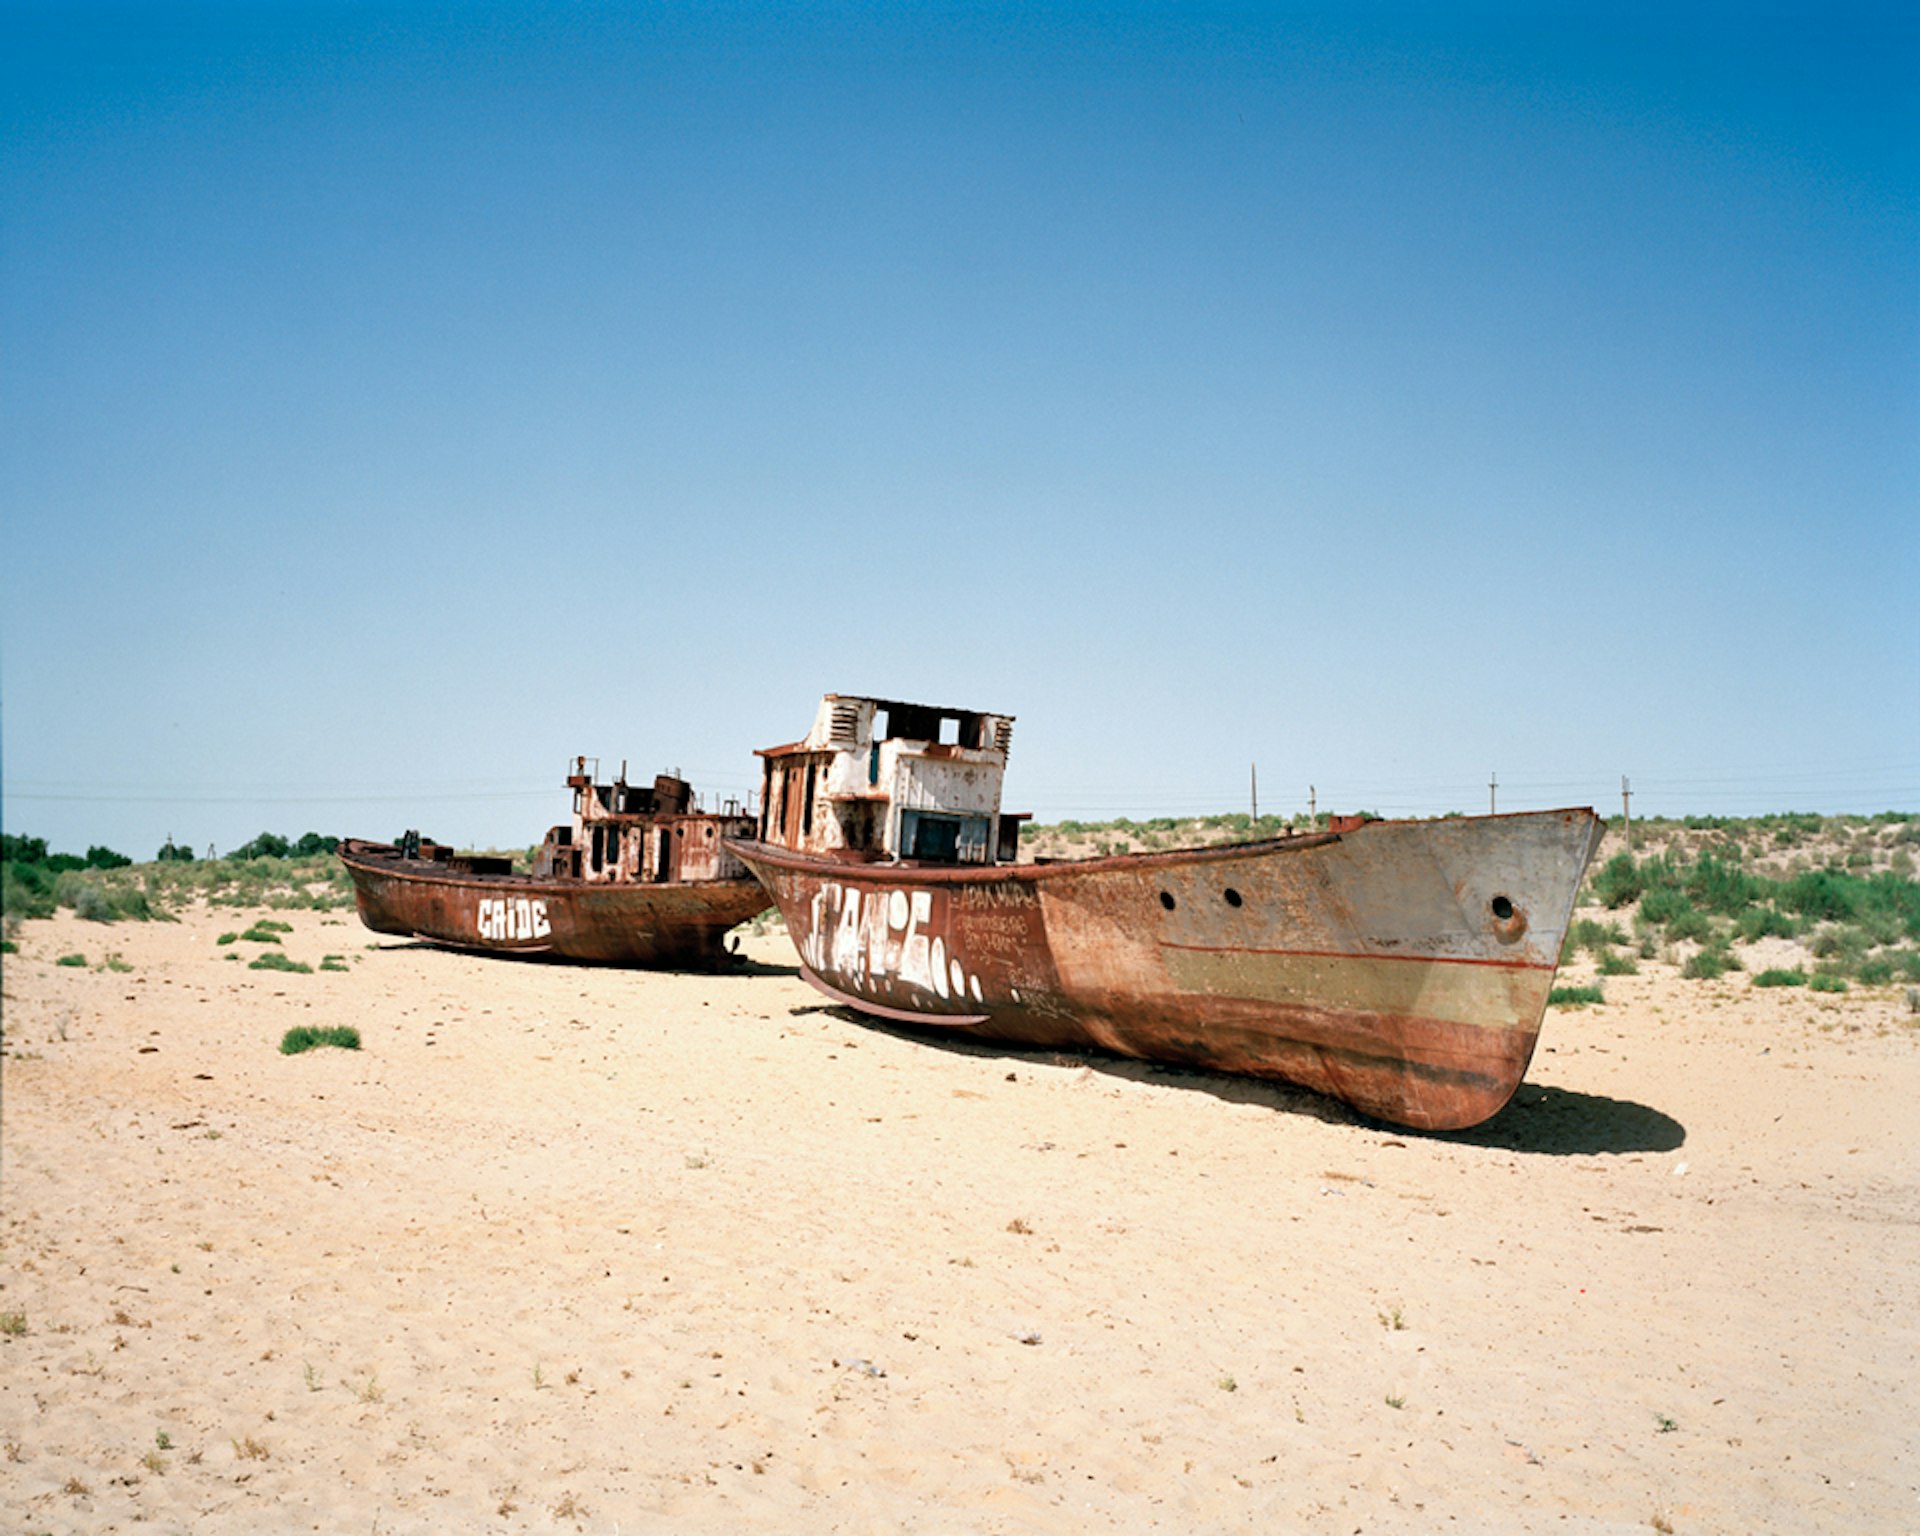 Marco-Barbieri-Water-In-The-Desert-Two-Boats